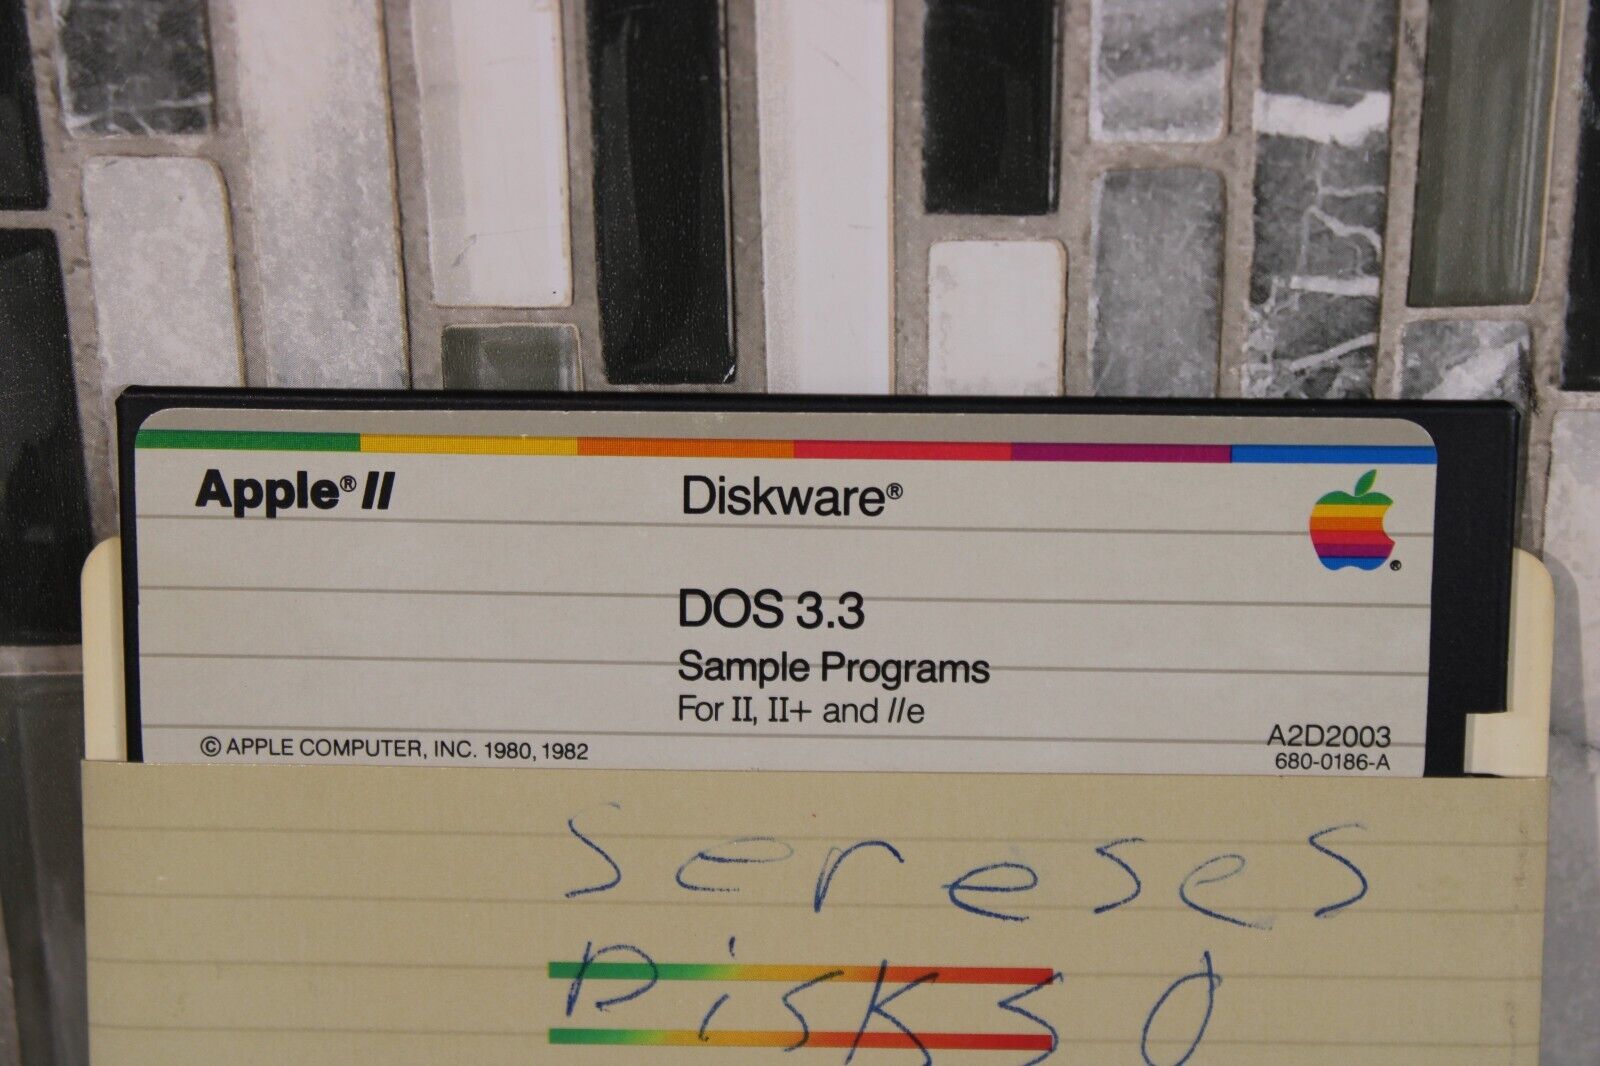 Apple II Diskware DOS 3.3 Sample Programs Software